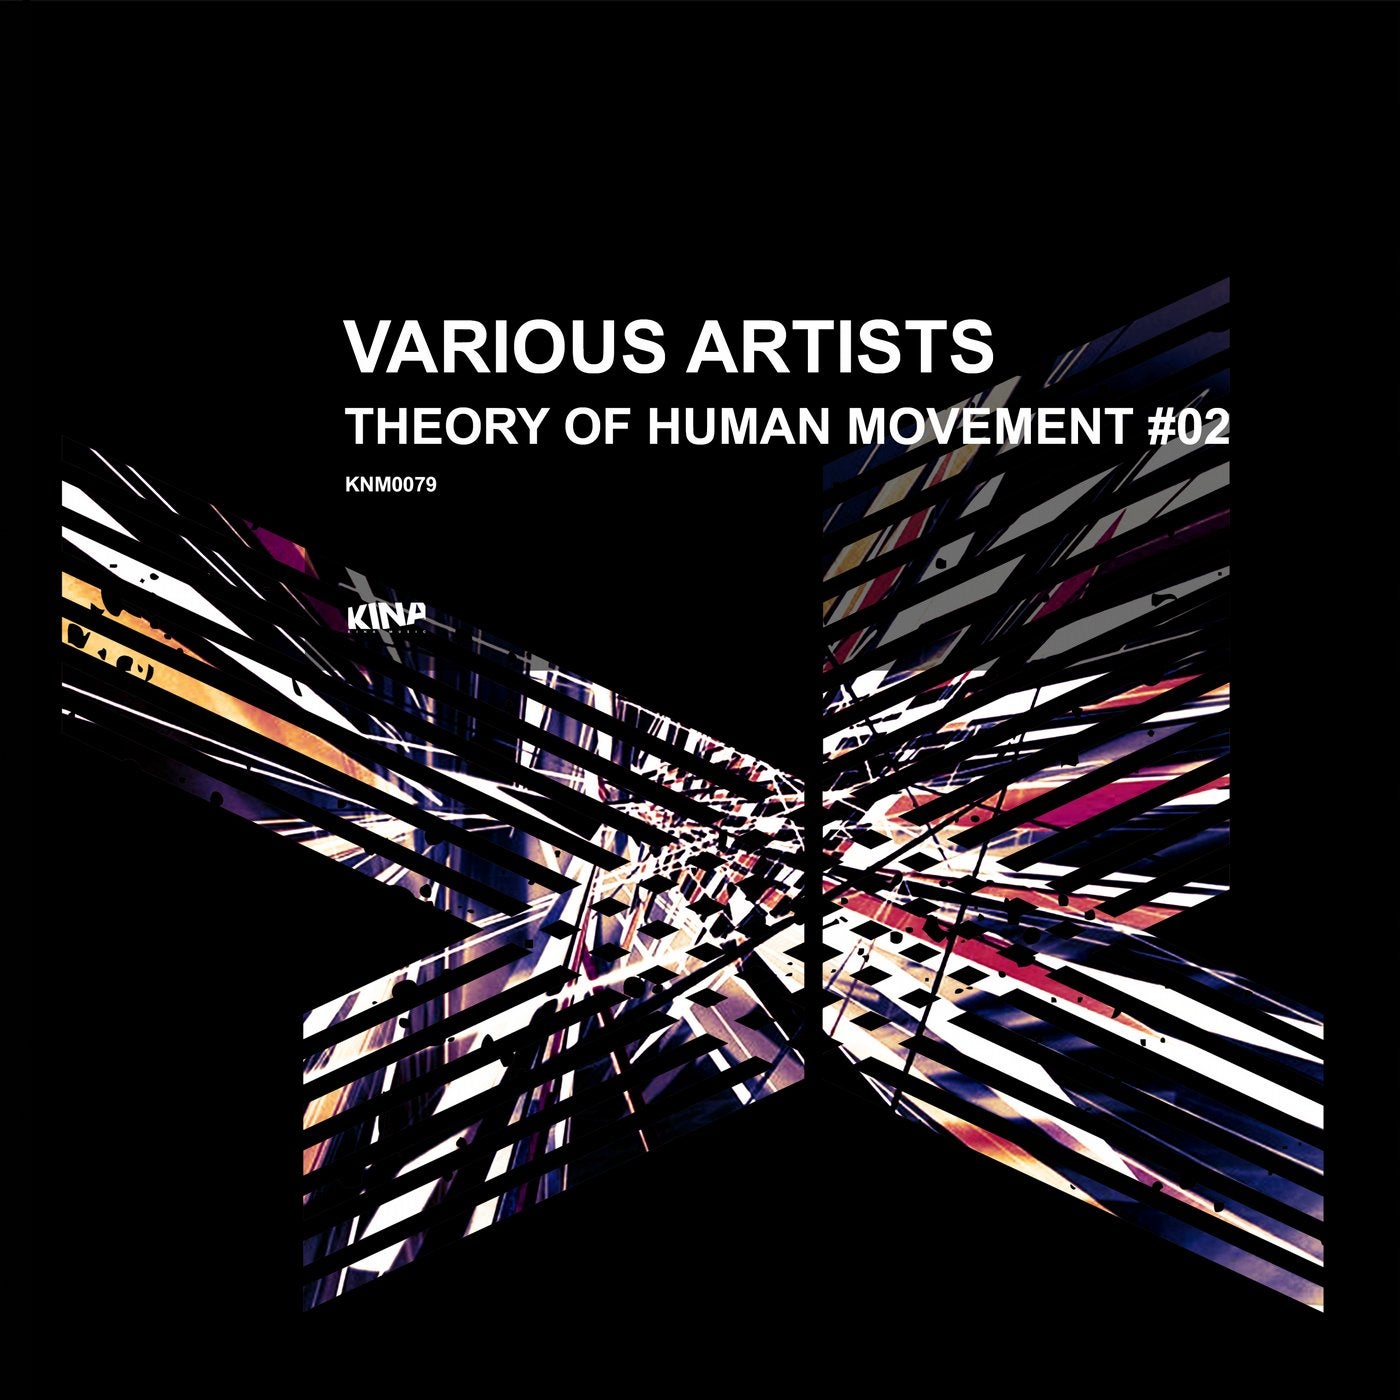 Theory of Human Movement #02